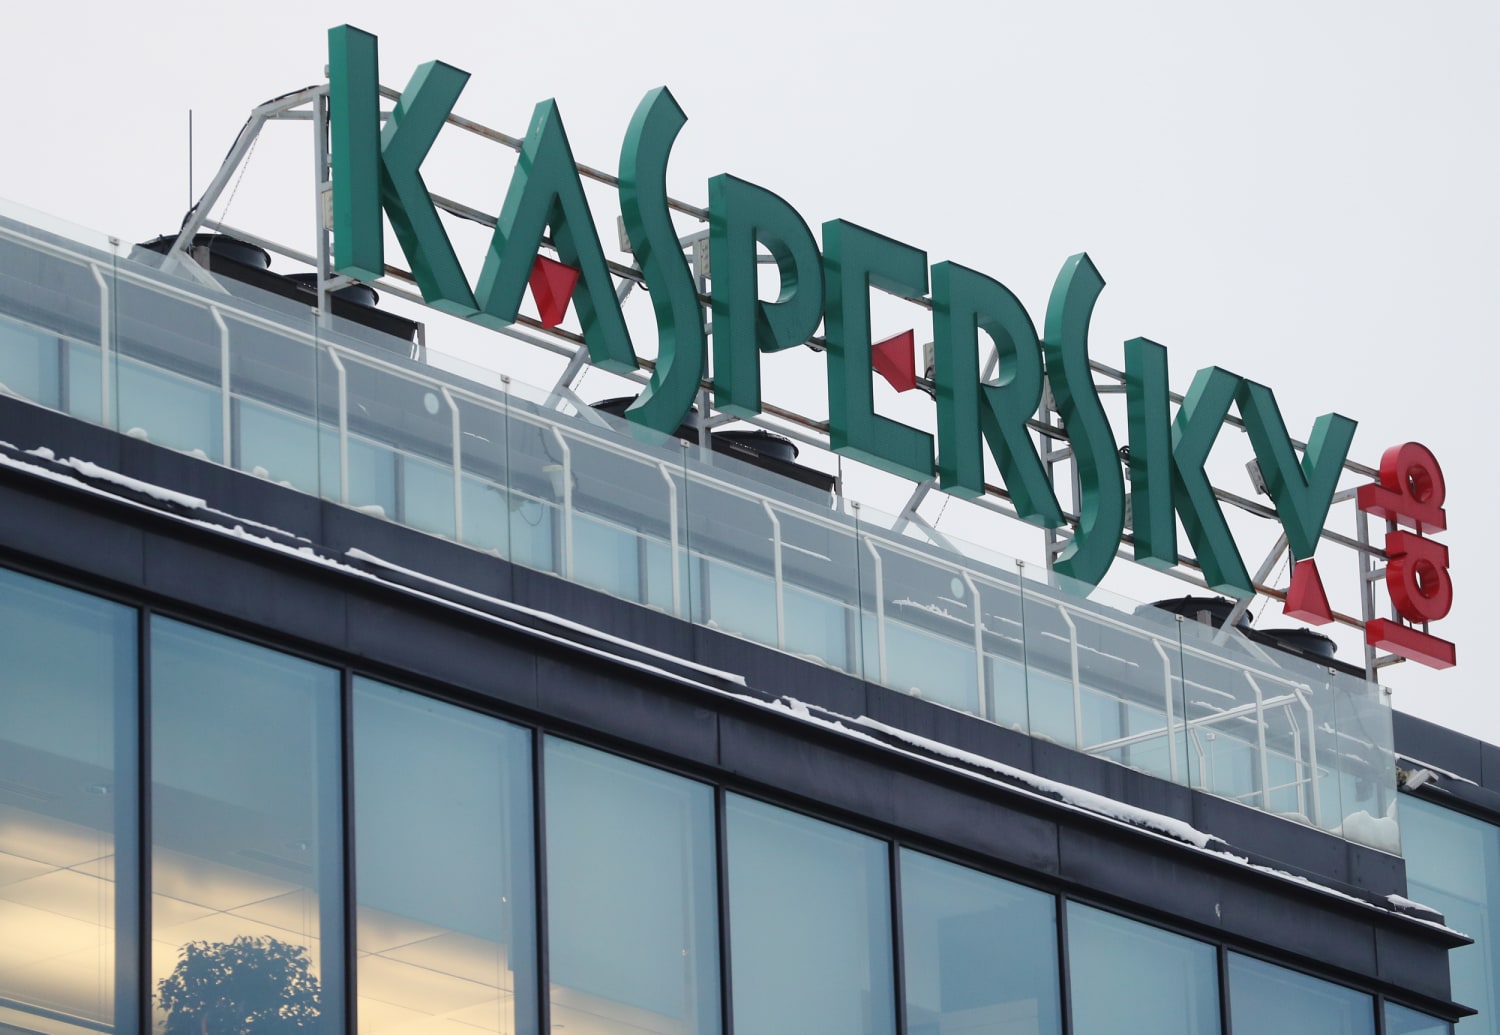 ProjectSuaron: Kaspersky Lab researchers describe espionage platform